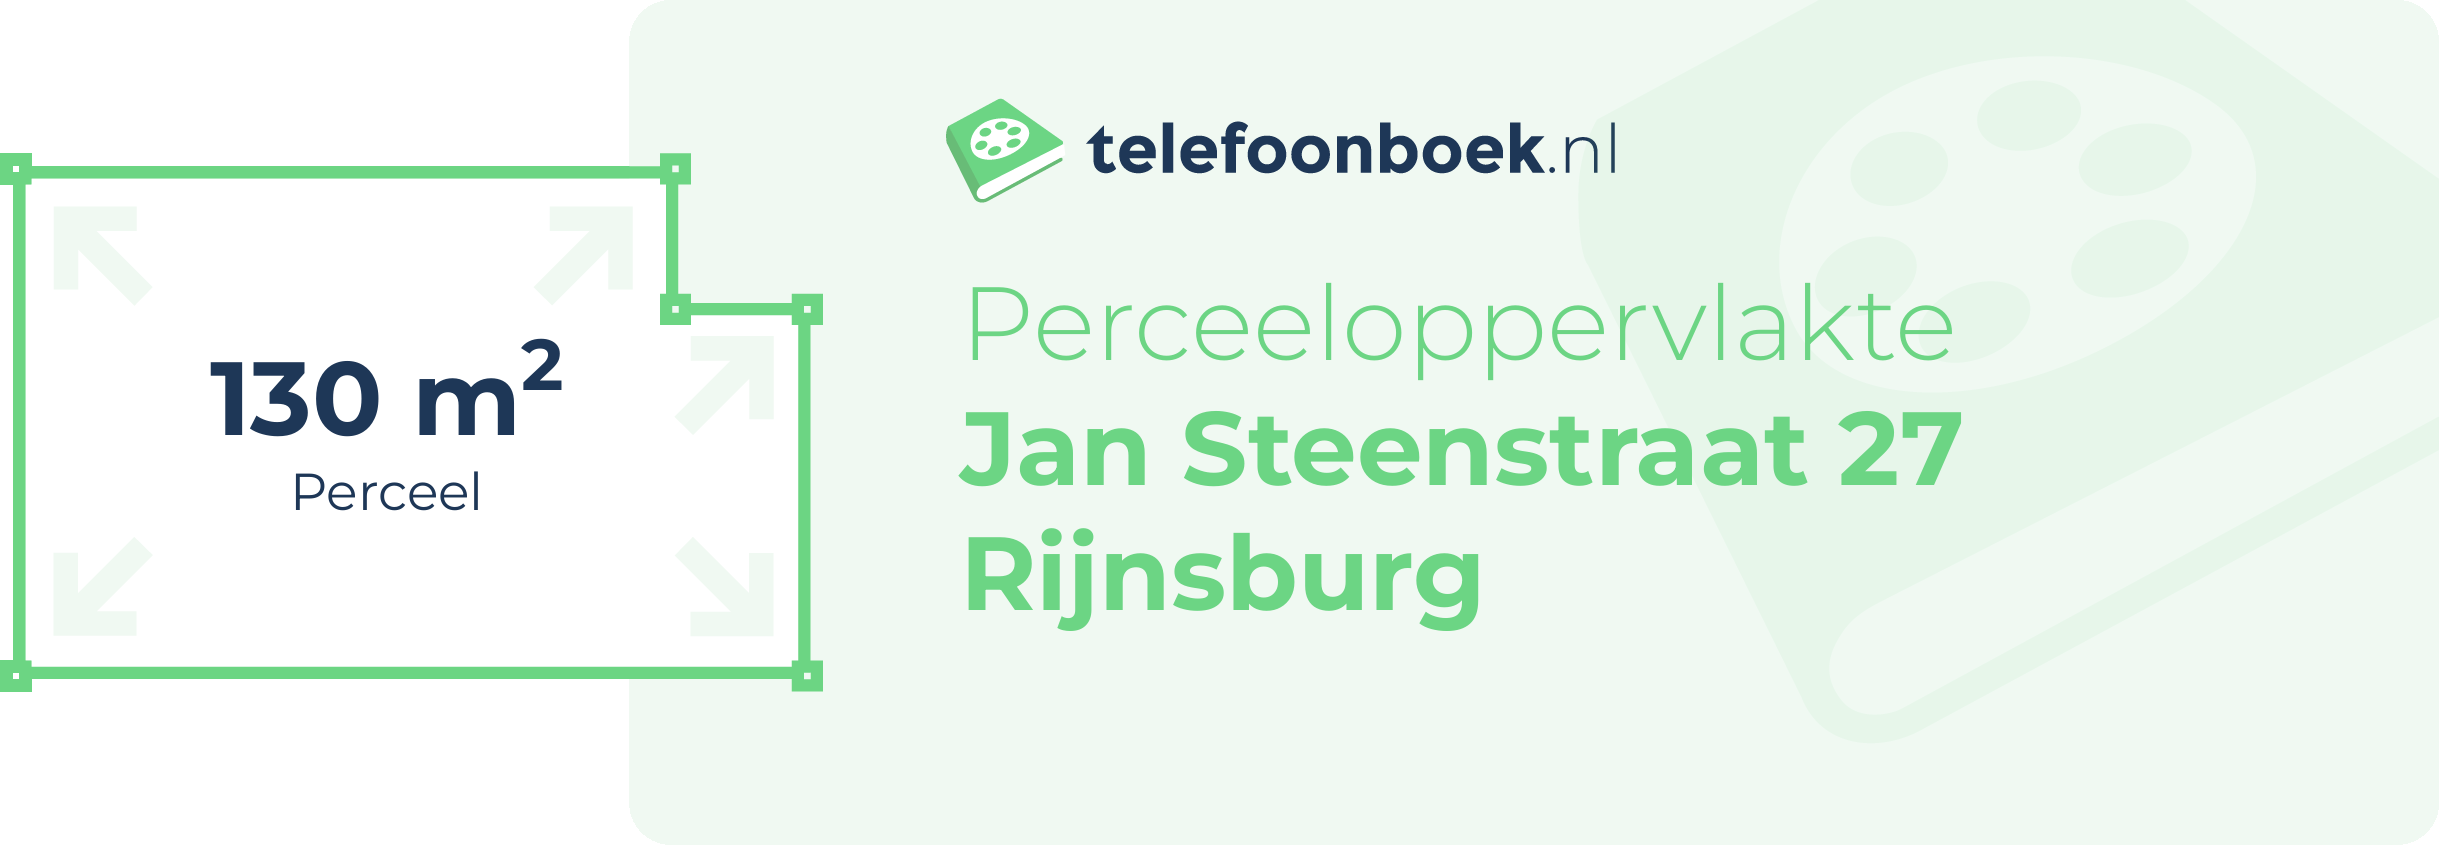 Perceeloppervlakte Jan Steenstraat 27 Rijnsburg